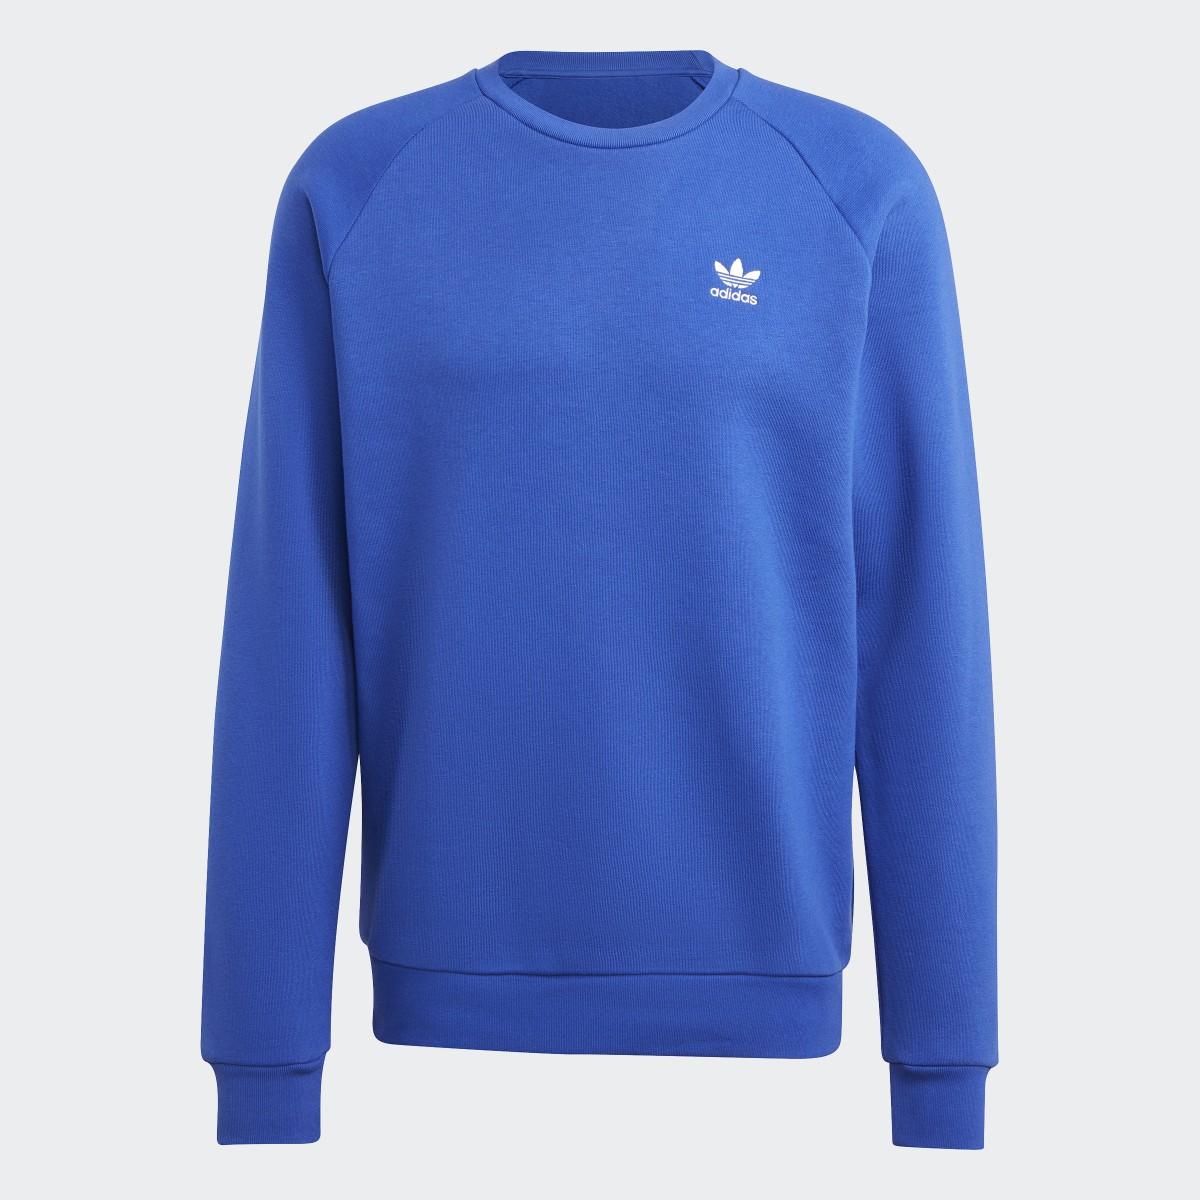 Adidas Trefoil Essentials Crewneck Sweatshirt. 5